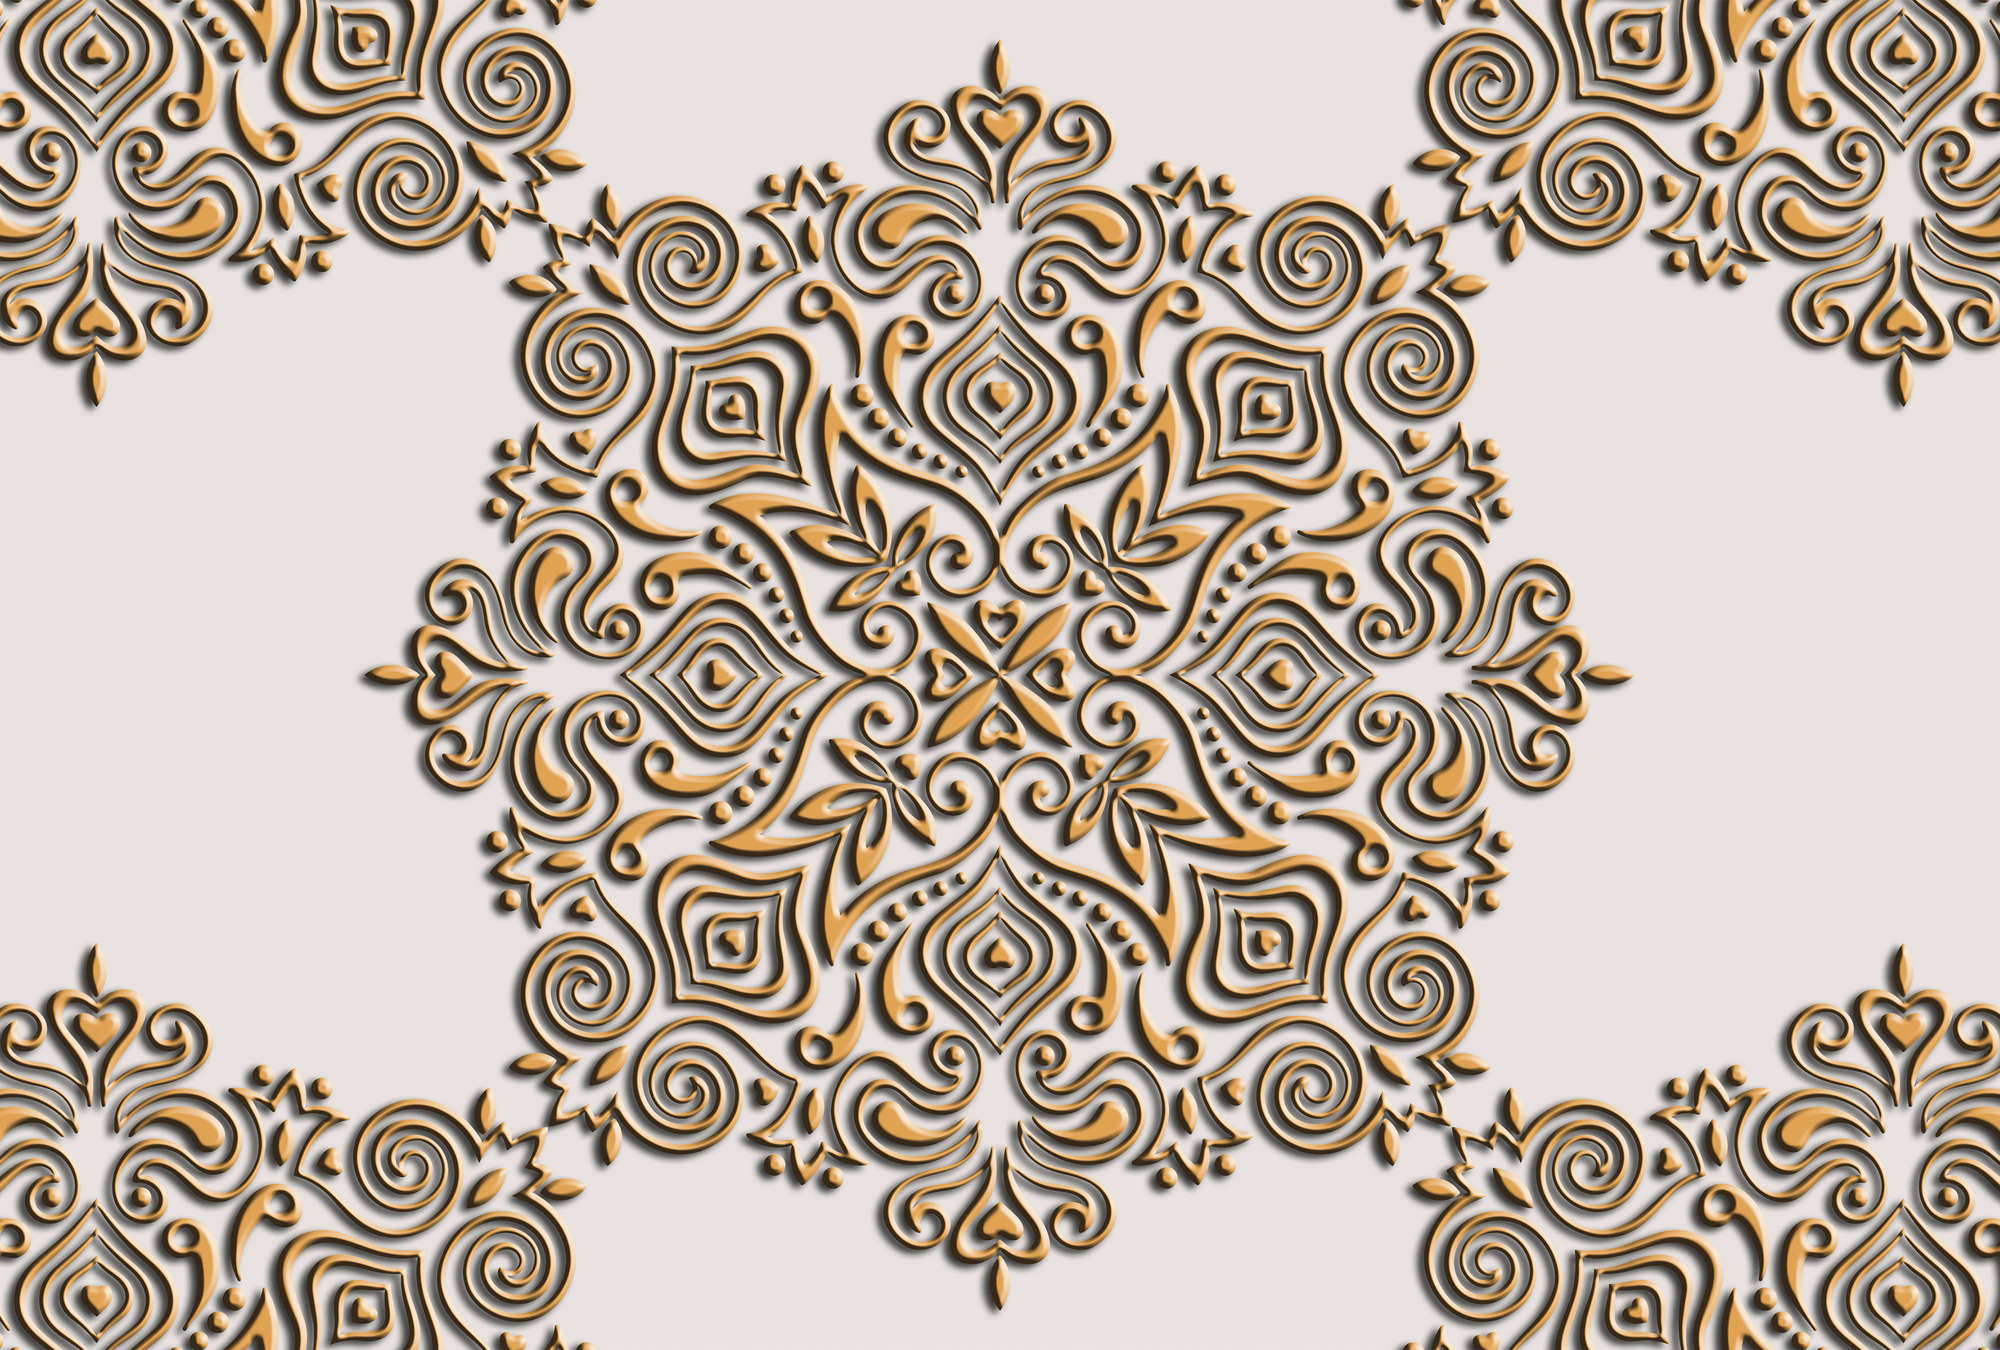             Fototapete Ornament Grafik mit geometrischem Gold Design
        